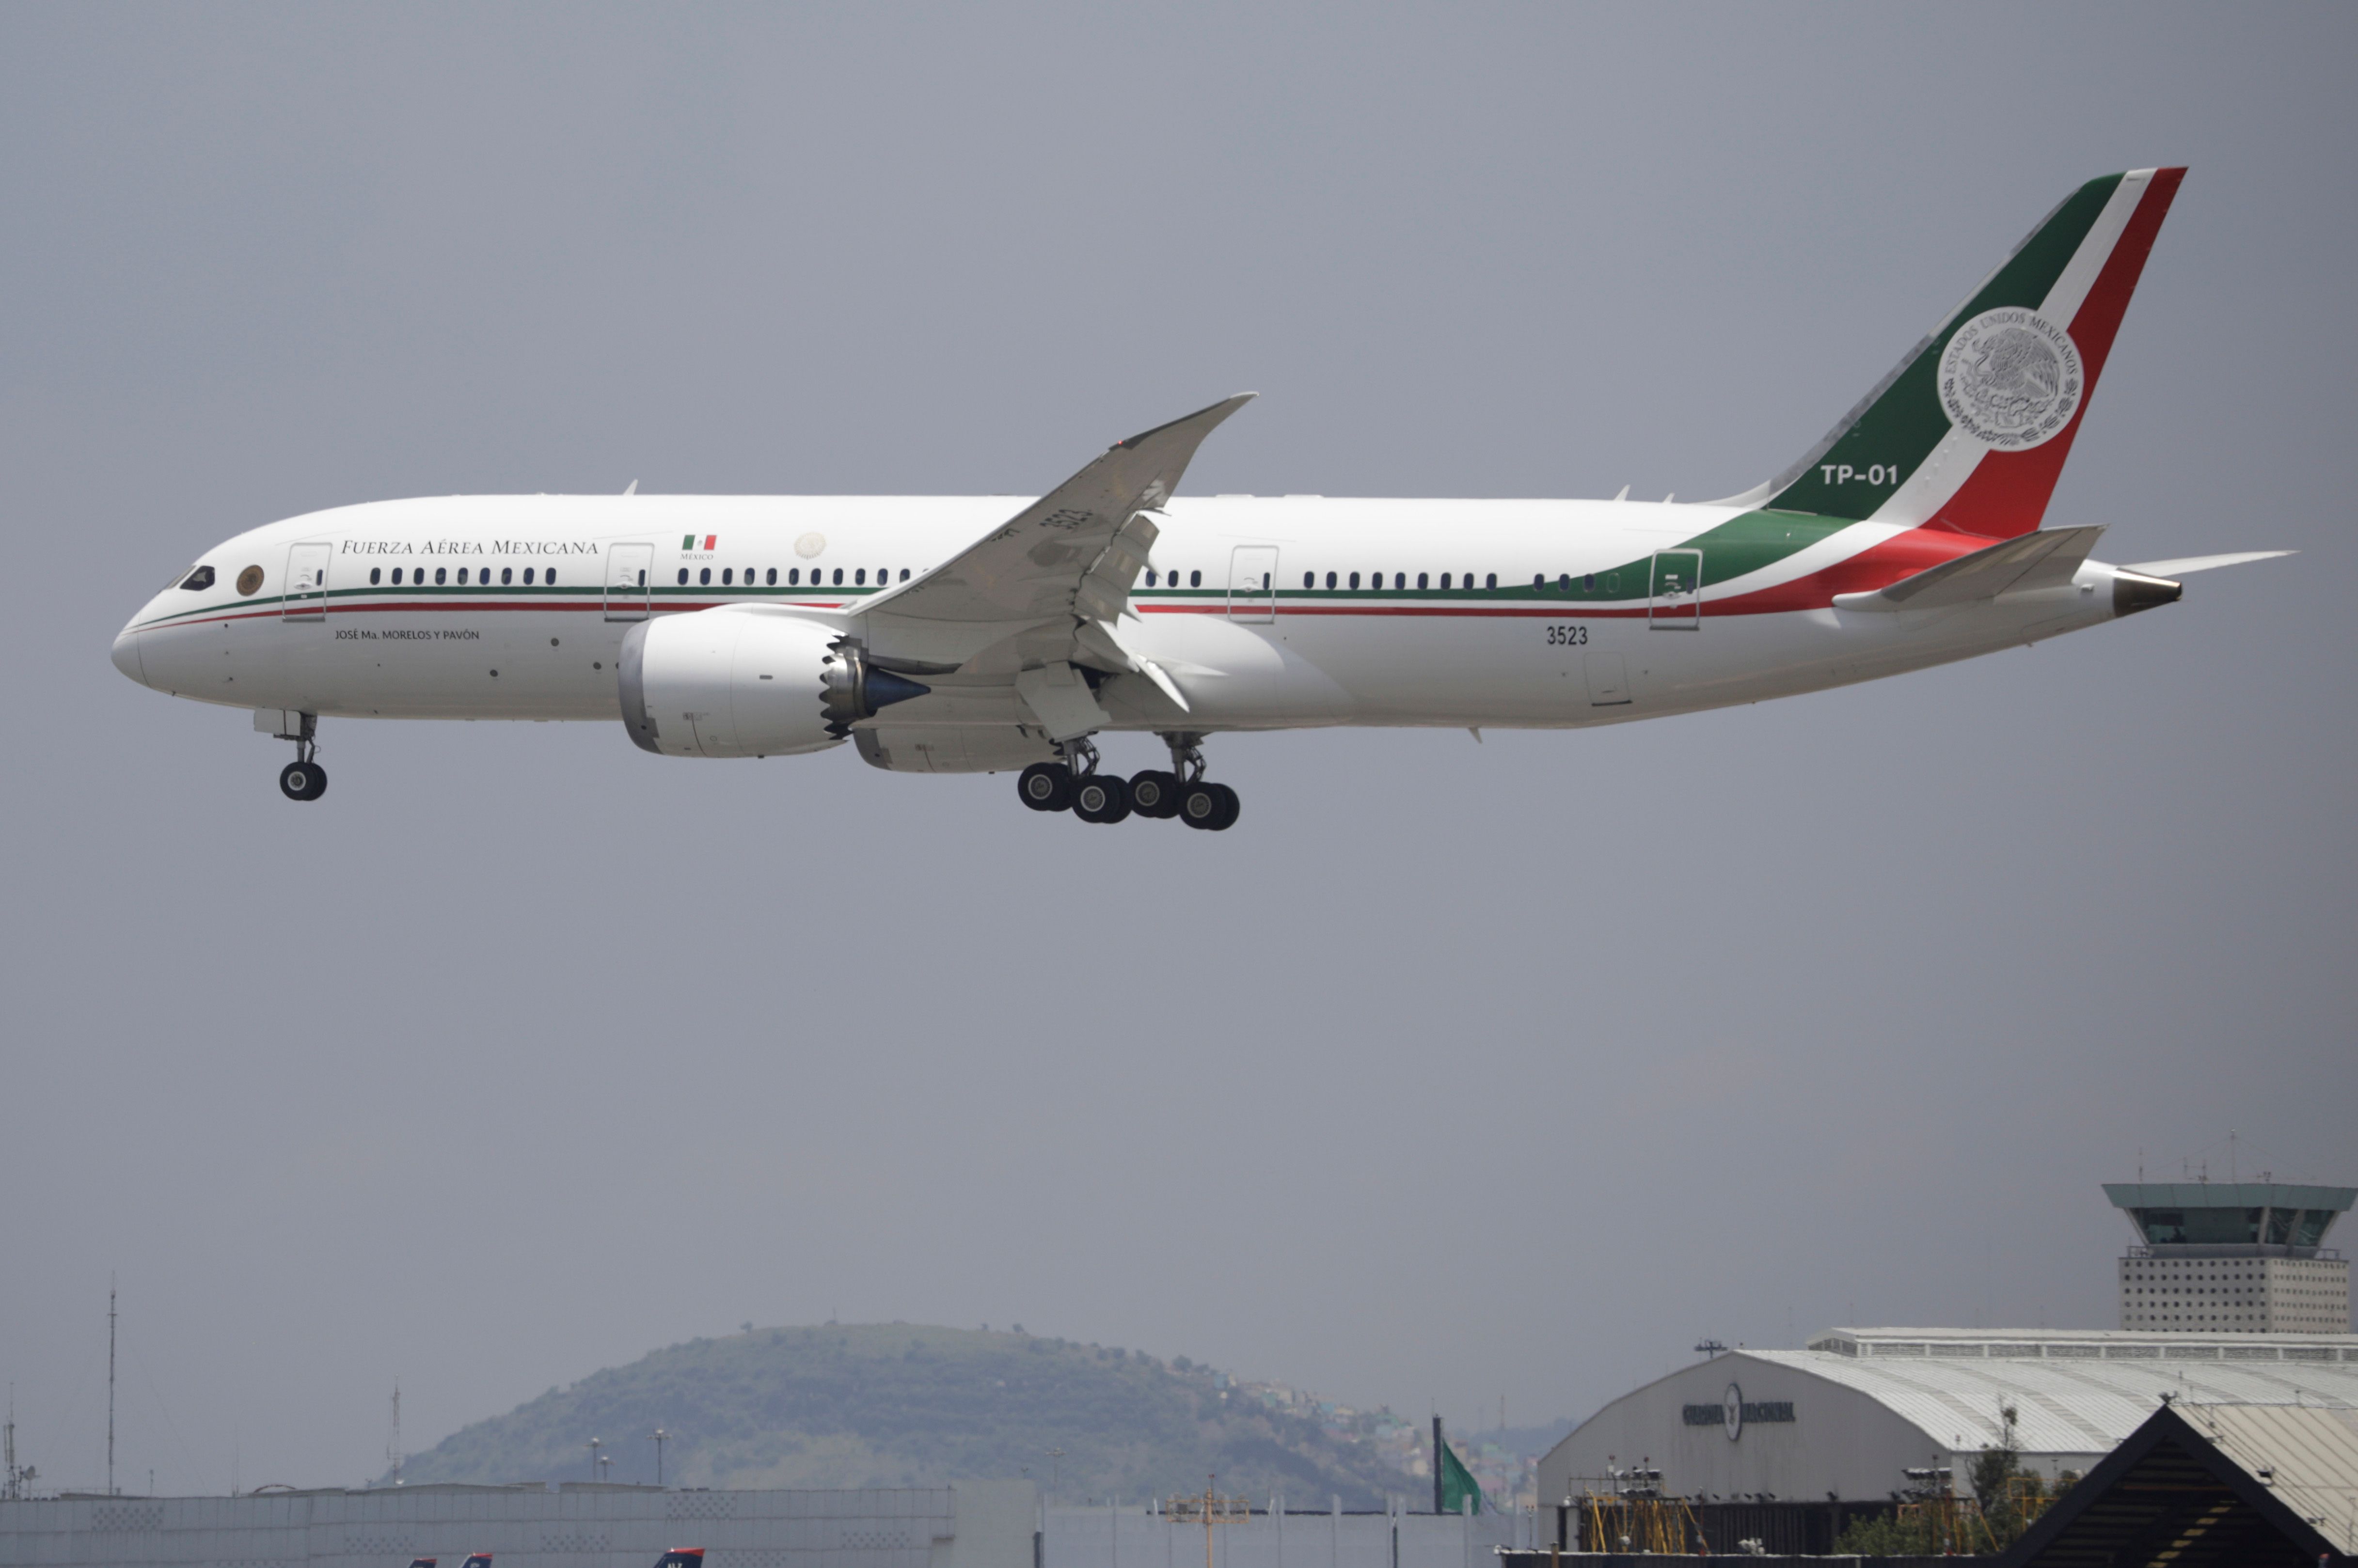 Mexico's presidential Boeing 787 jet